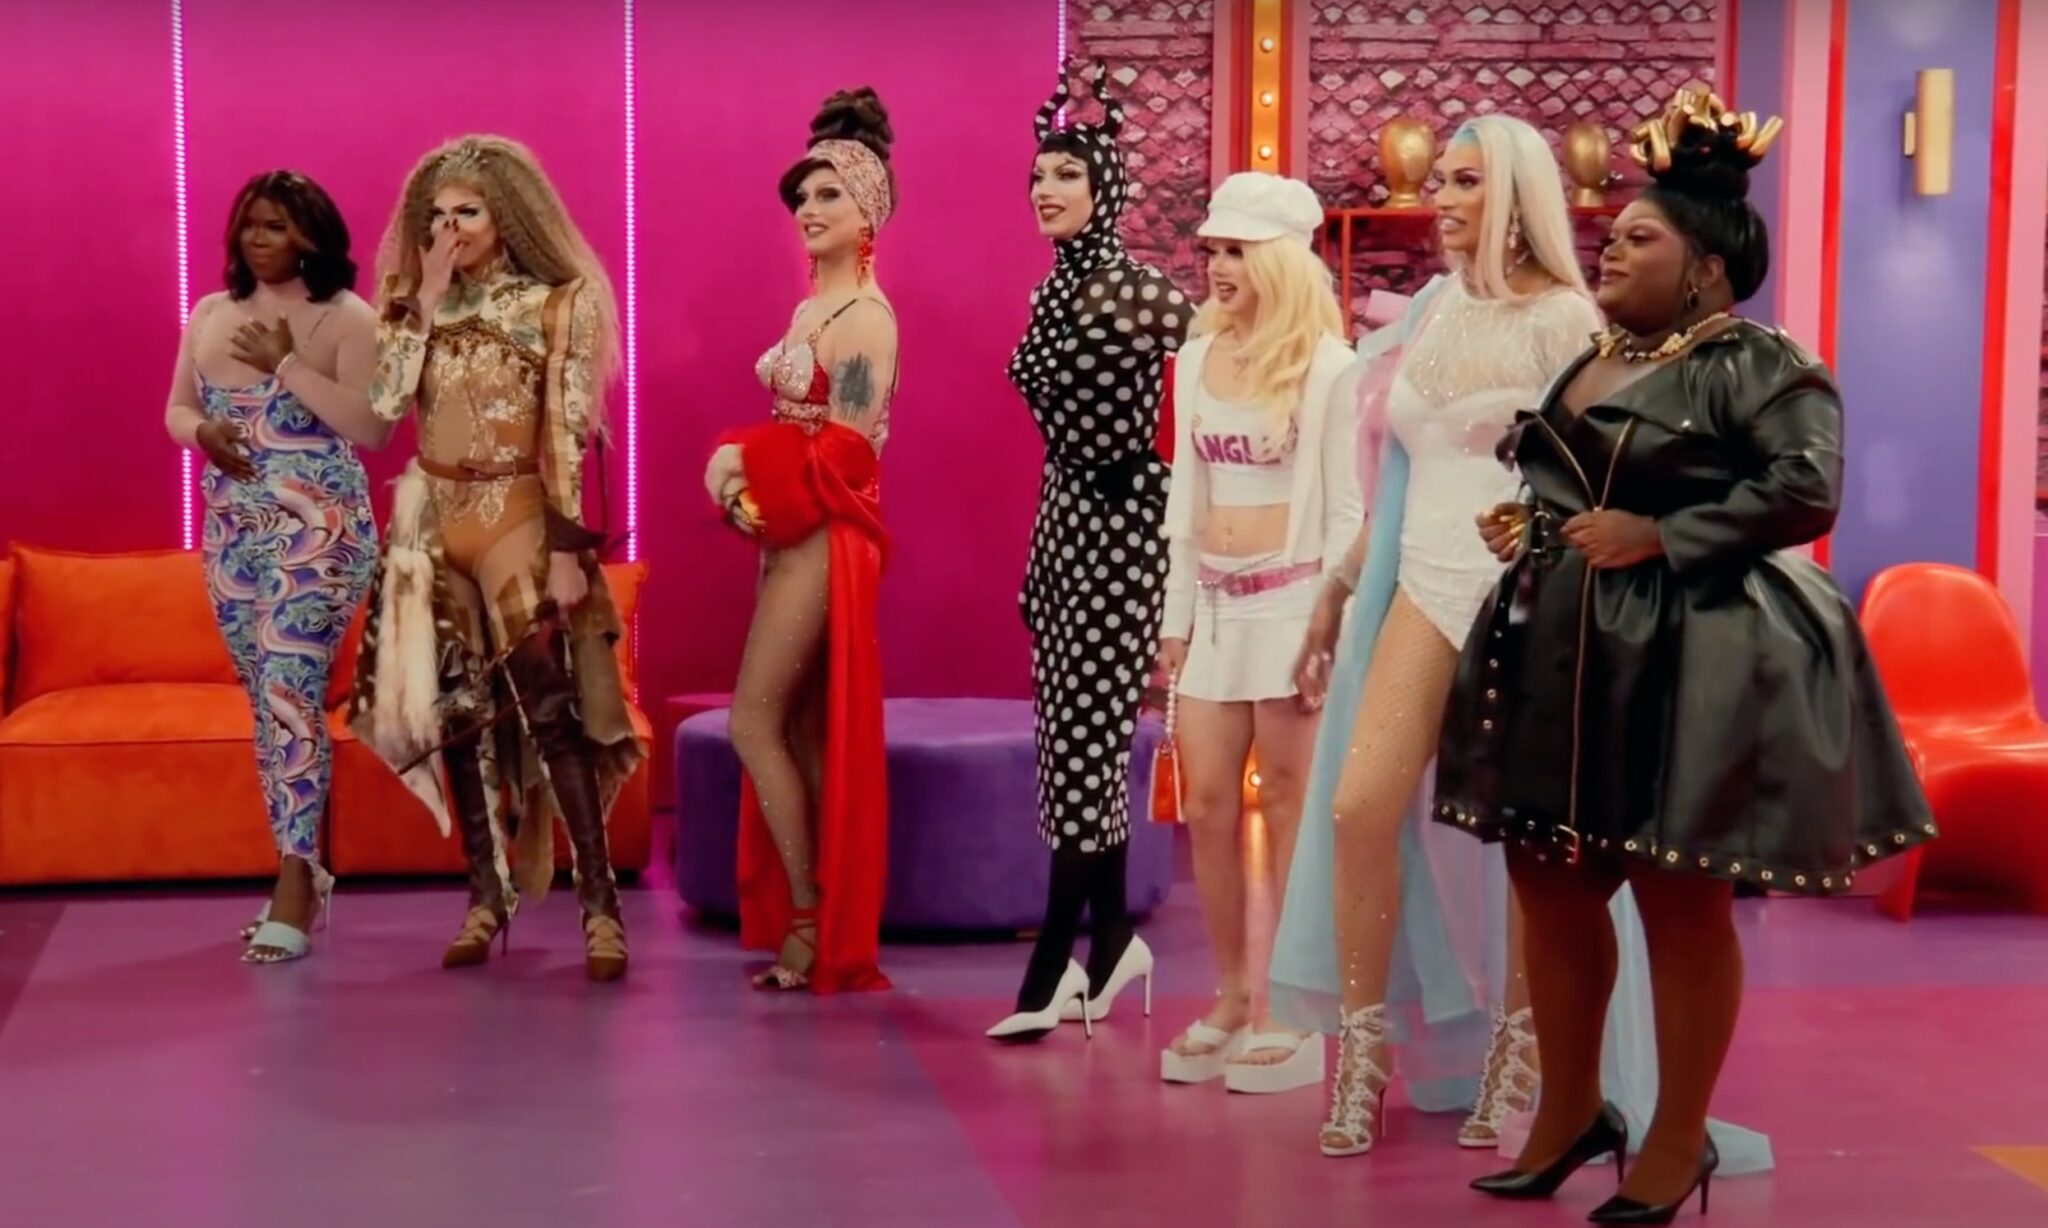 pinknews.co.uk - Ahead of the RuPaul’s Drag Race season 14 premiere, the fi...